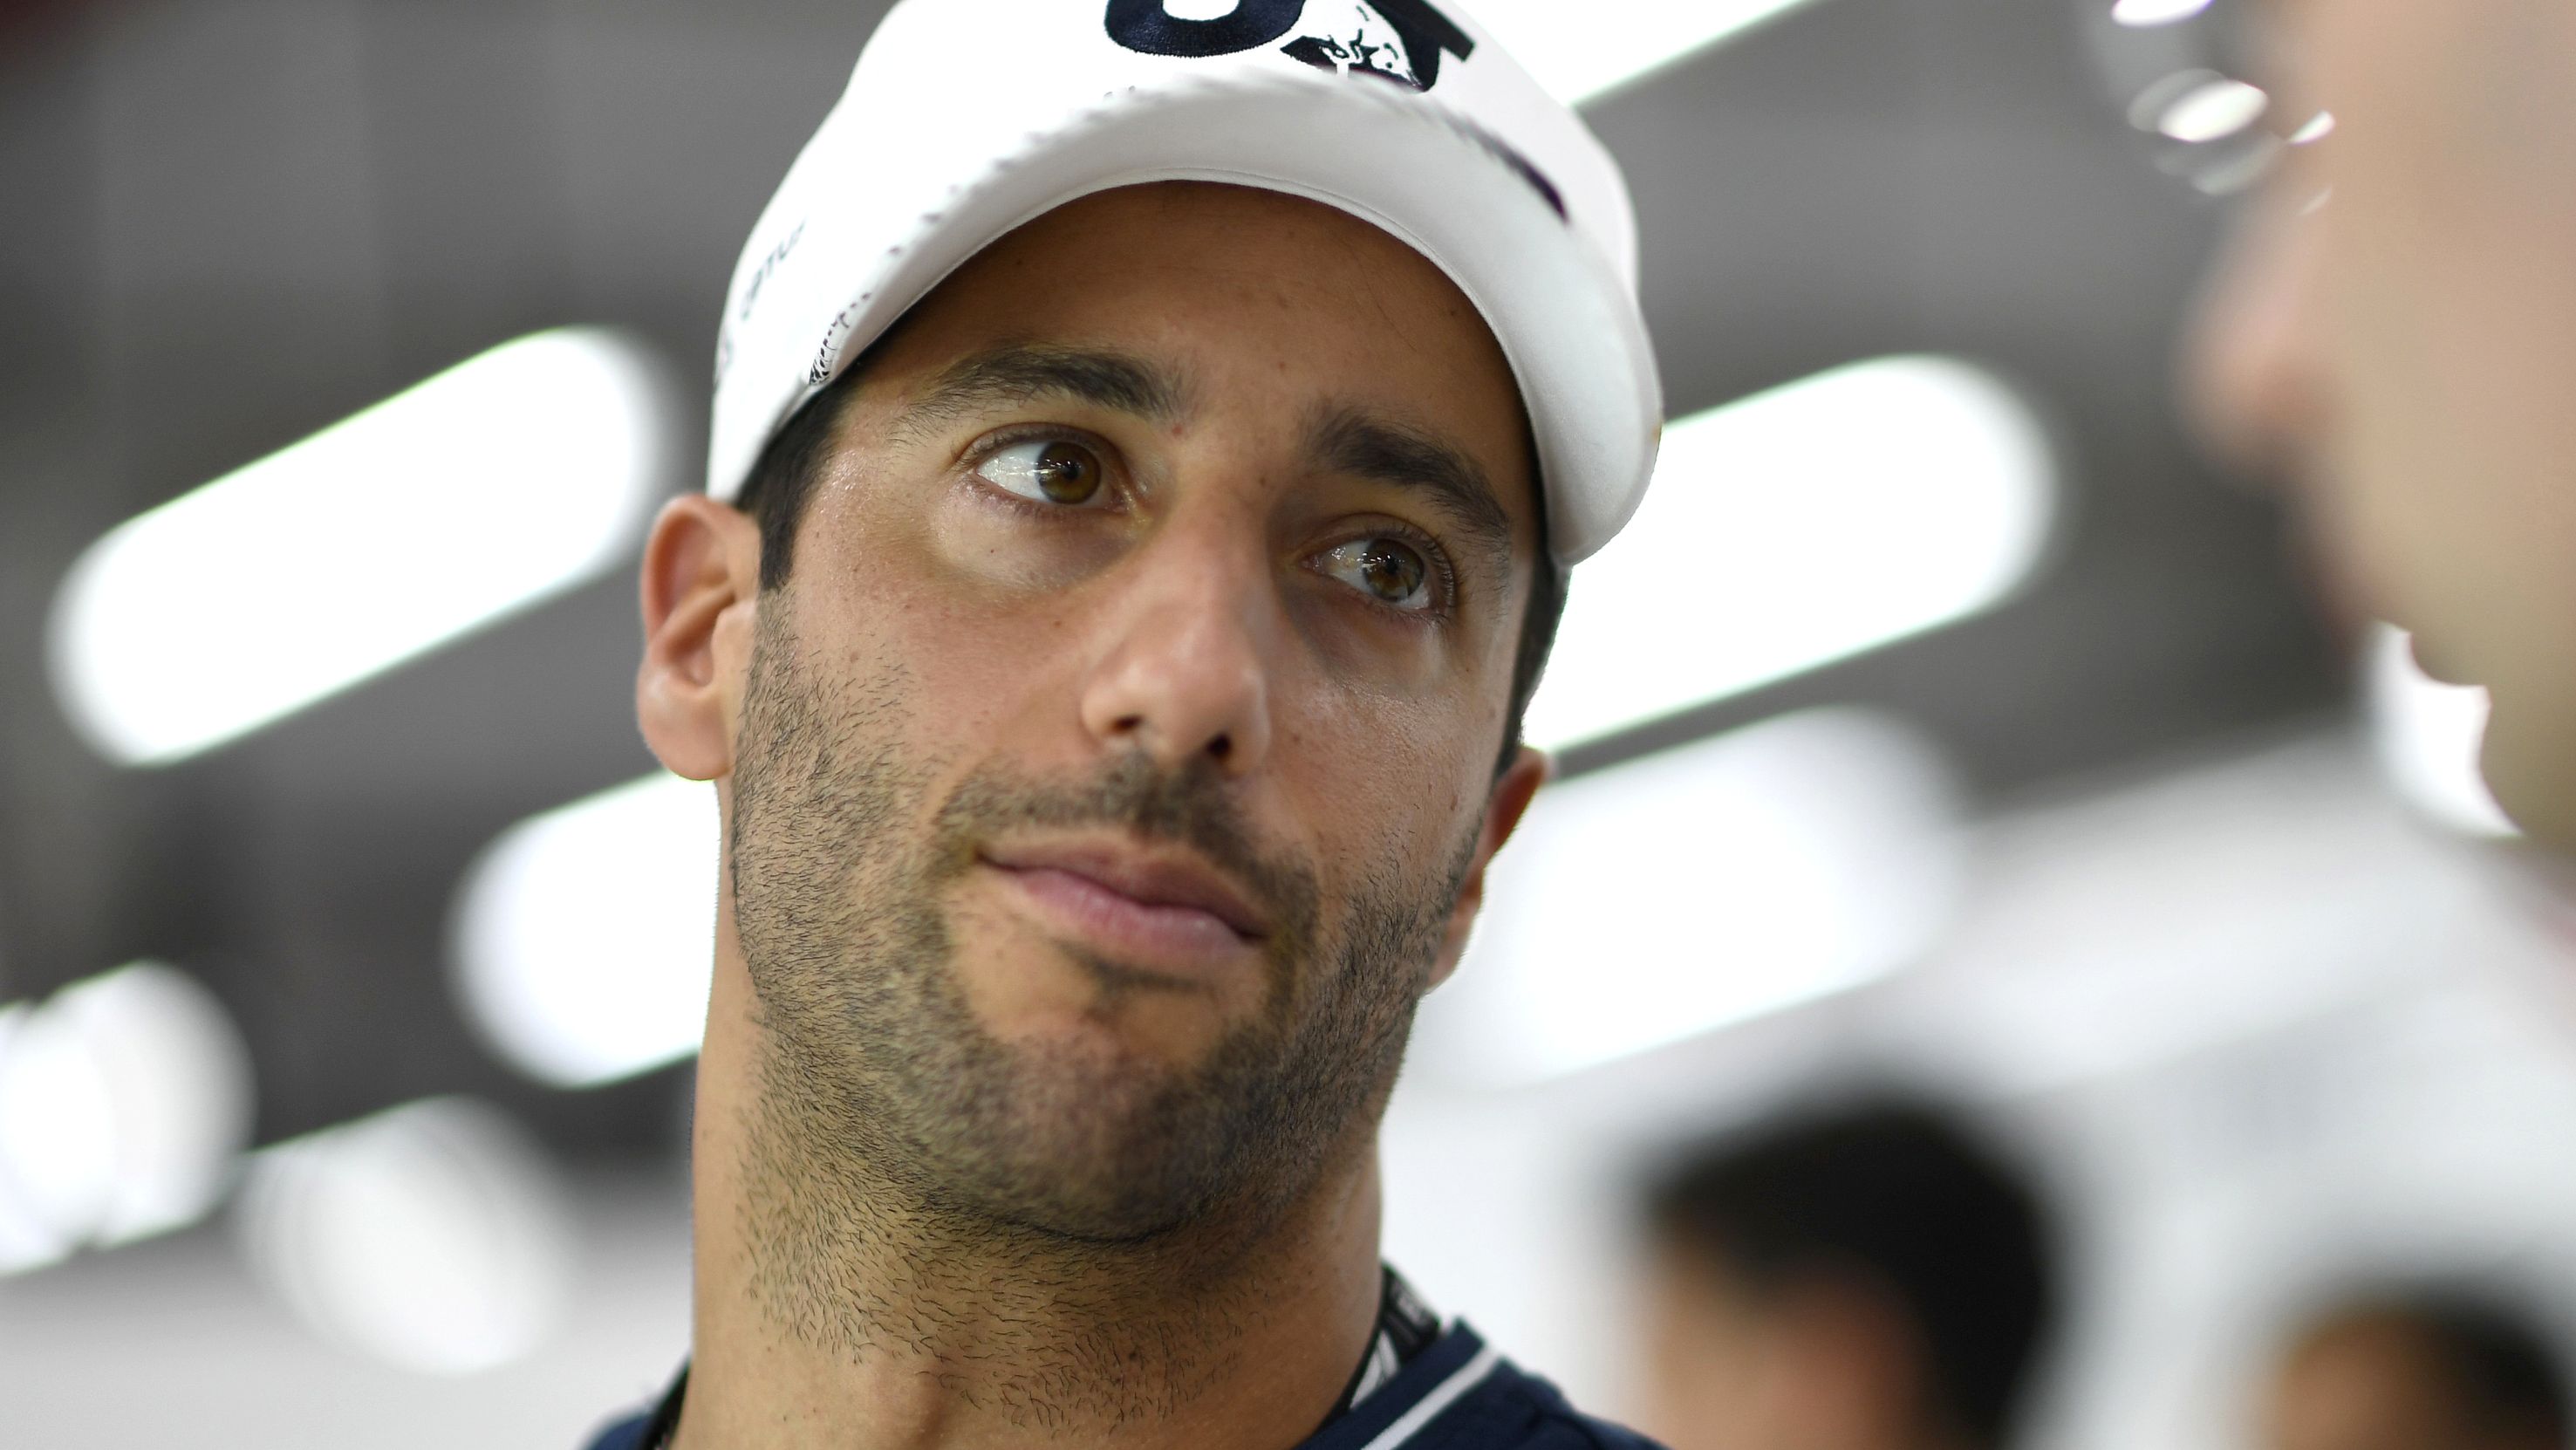 Daniel Ricciardo injured his hand in a crash at the Dutch Grand Prix.